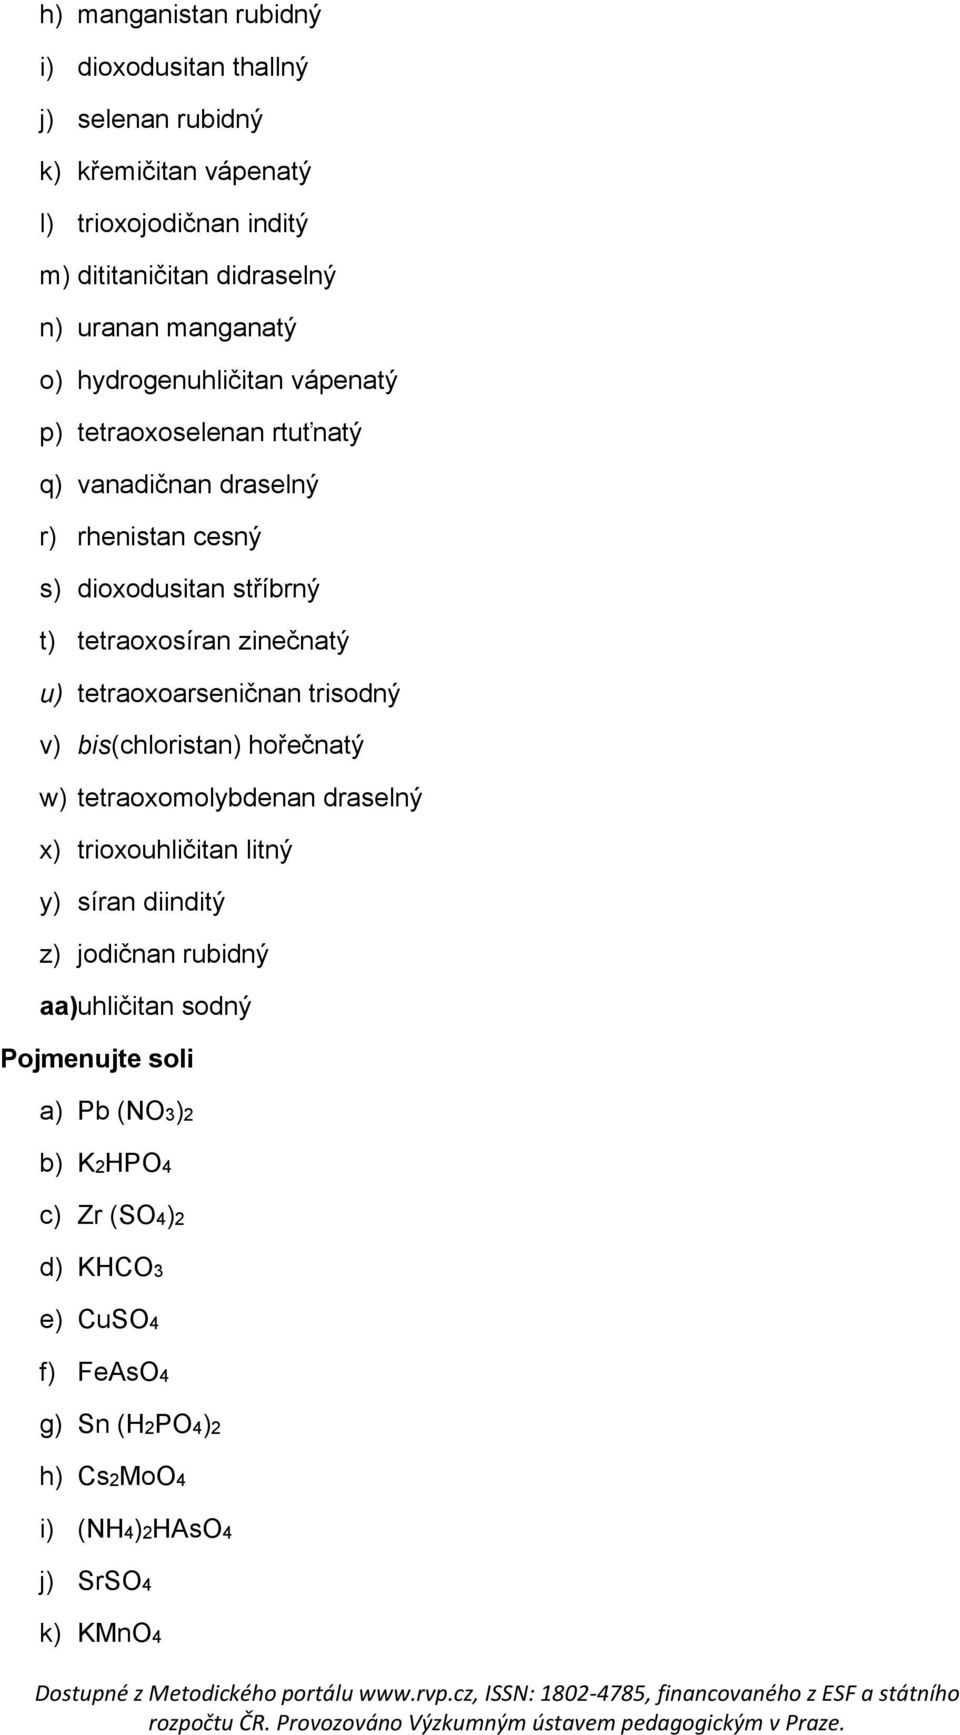 zinečnatý u) tetraoxoarseničnan trisodný v) bis(chloristan) hořečnatý w) tetraoxomolybdenan draselný x) trioxouhličitan litný y) síran diinditý z) jodičnan